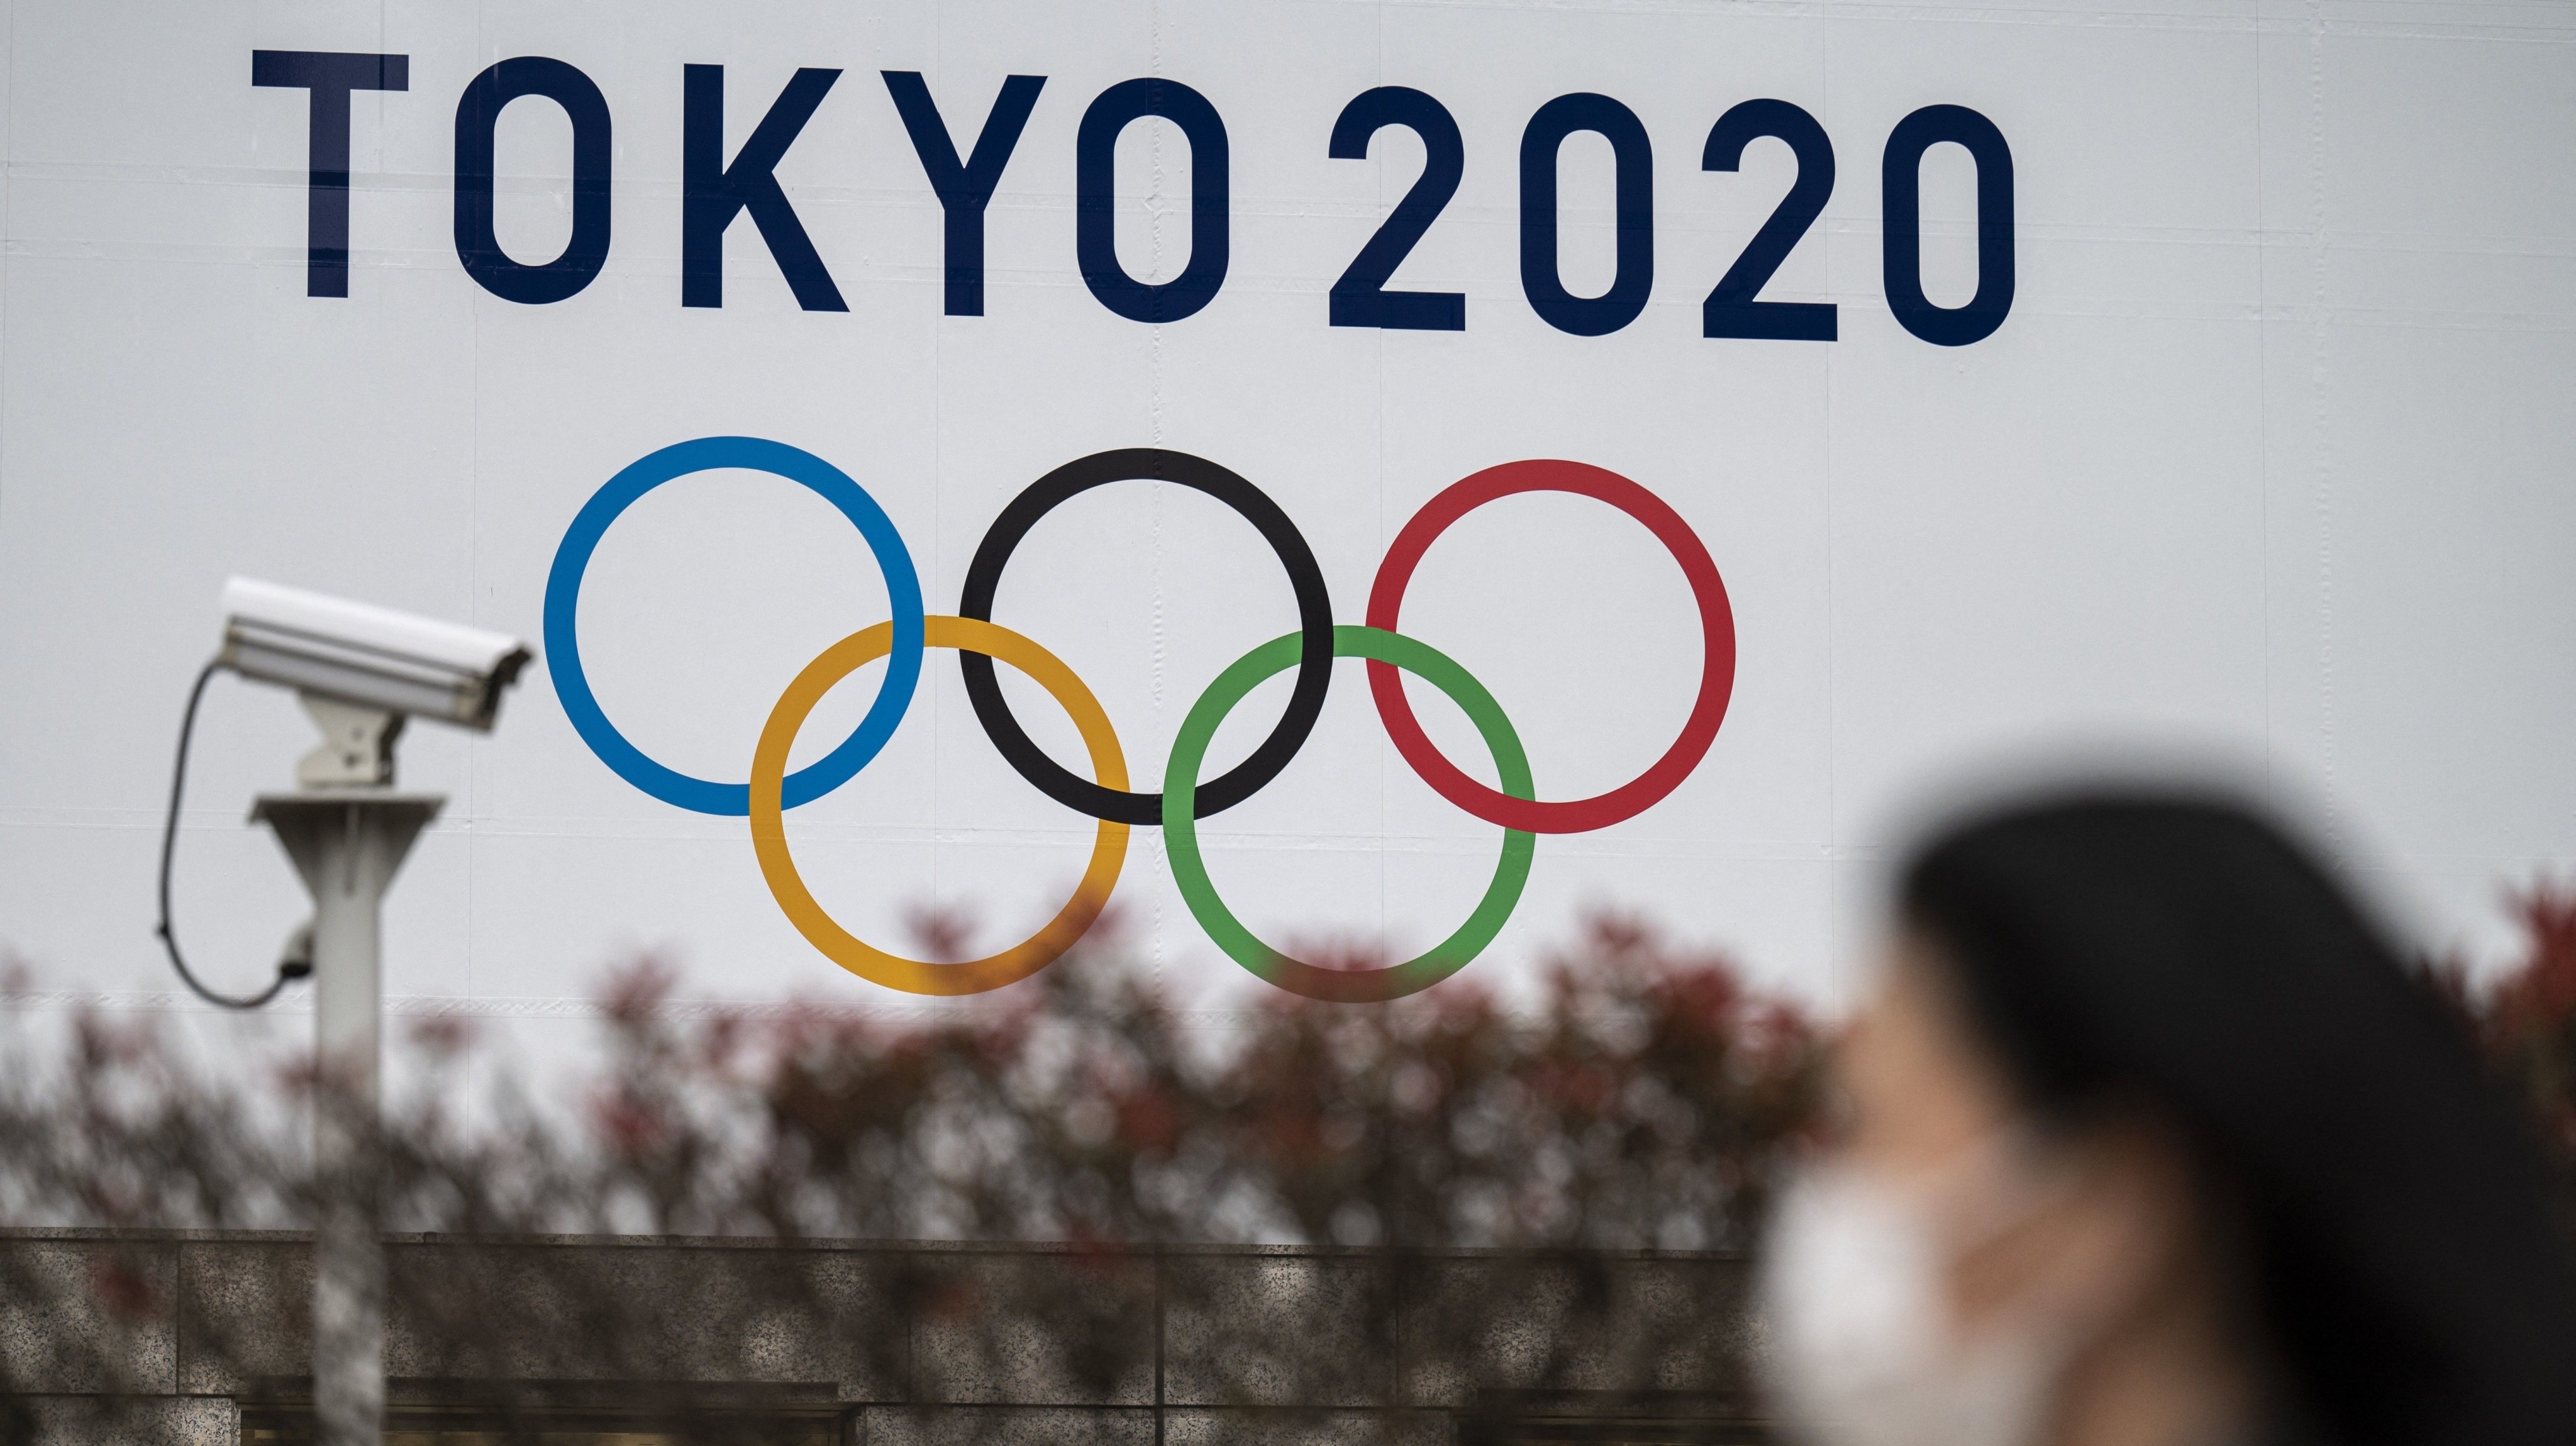 OLY-2020-2021-TOKYO